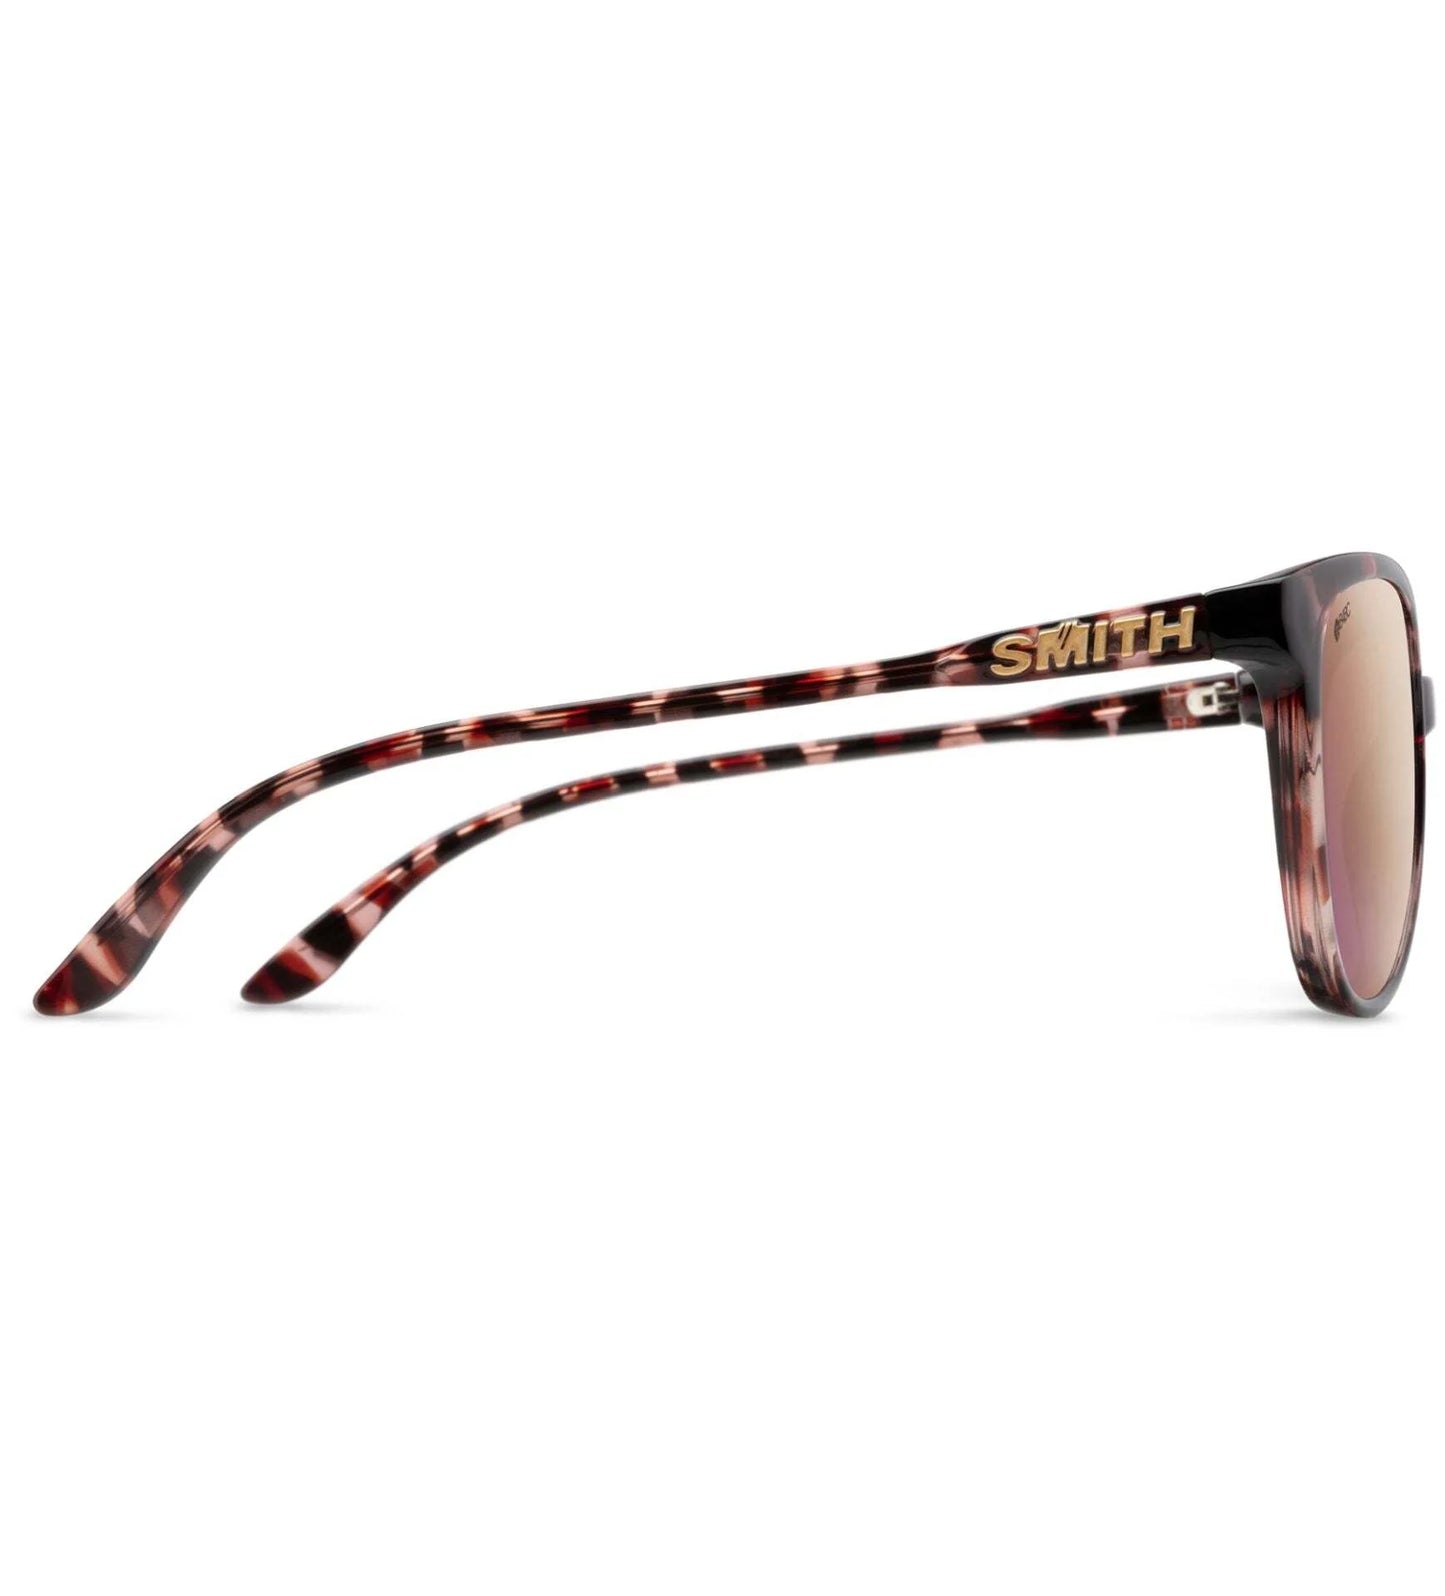 Smith Optics Smith x B4BC Cheetah Sunglasses